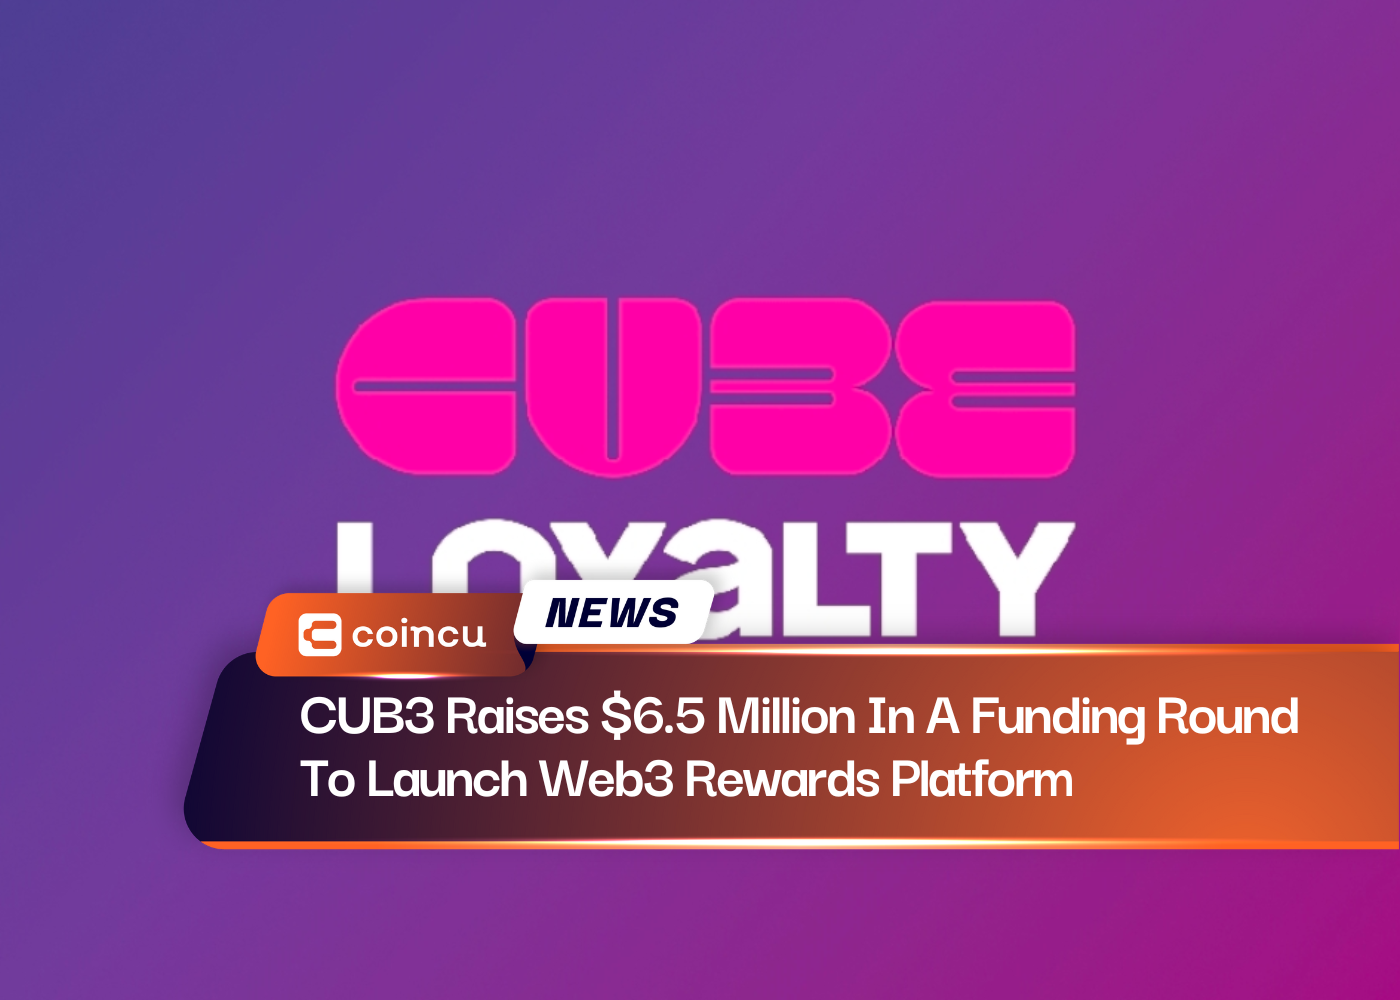 CUB3 Raises $6.5 Million In A Funding Round To Launch Web3 Rewards Platform